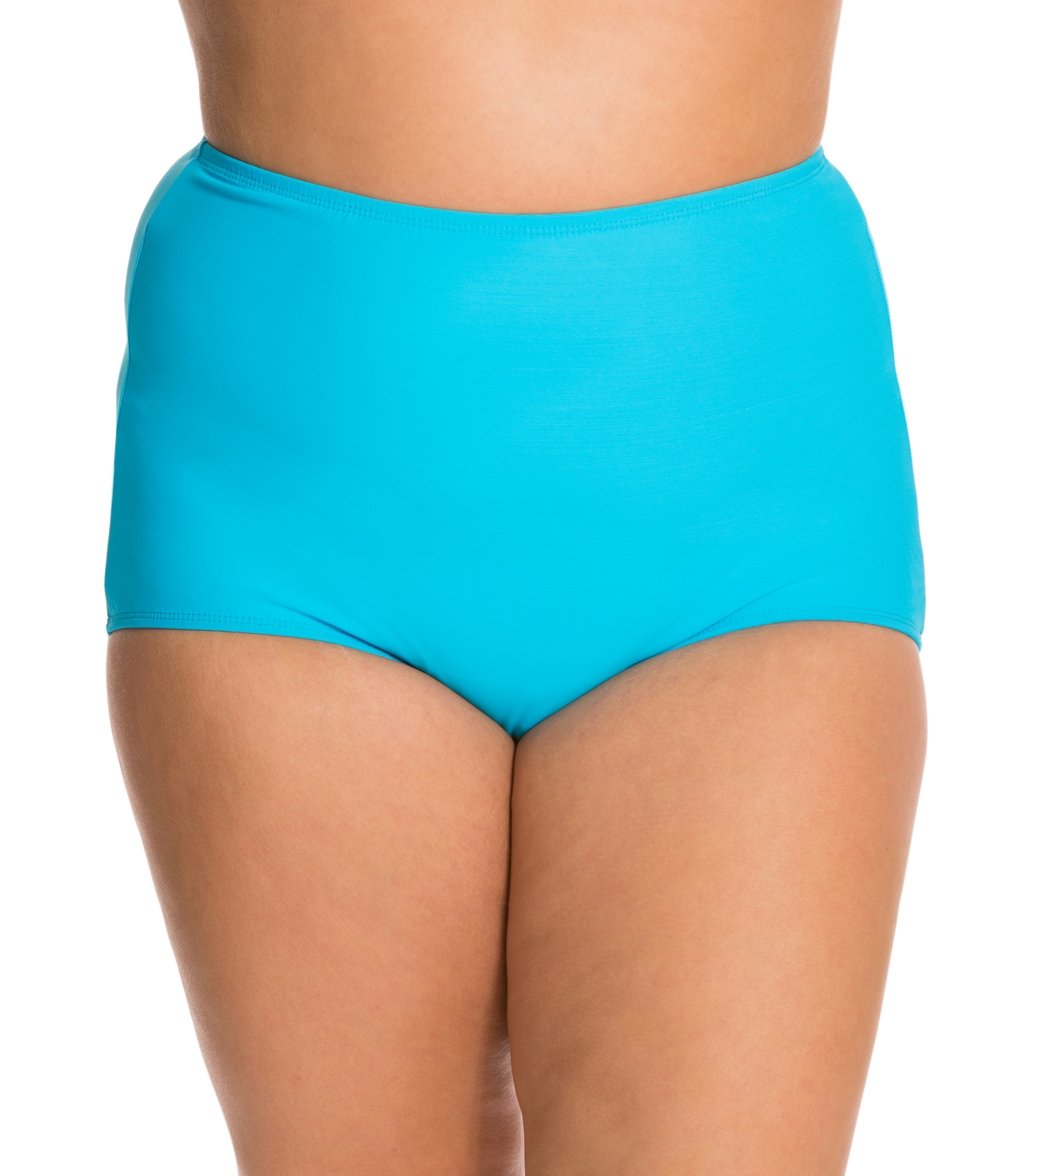 Topanga Plus Size Solid Conservative Brief Bikini Bottom - Turquoise 18W Nylon/Spandex - Swimoutlet.com